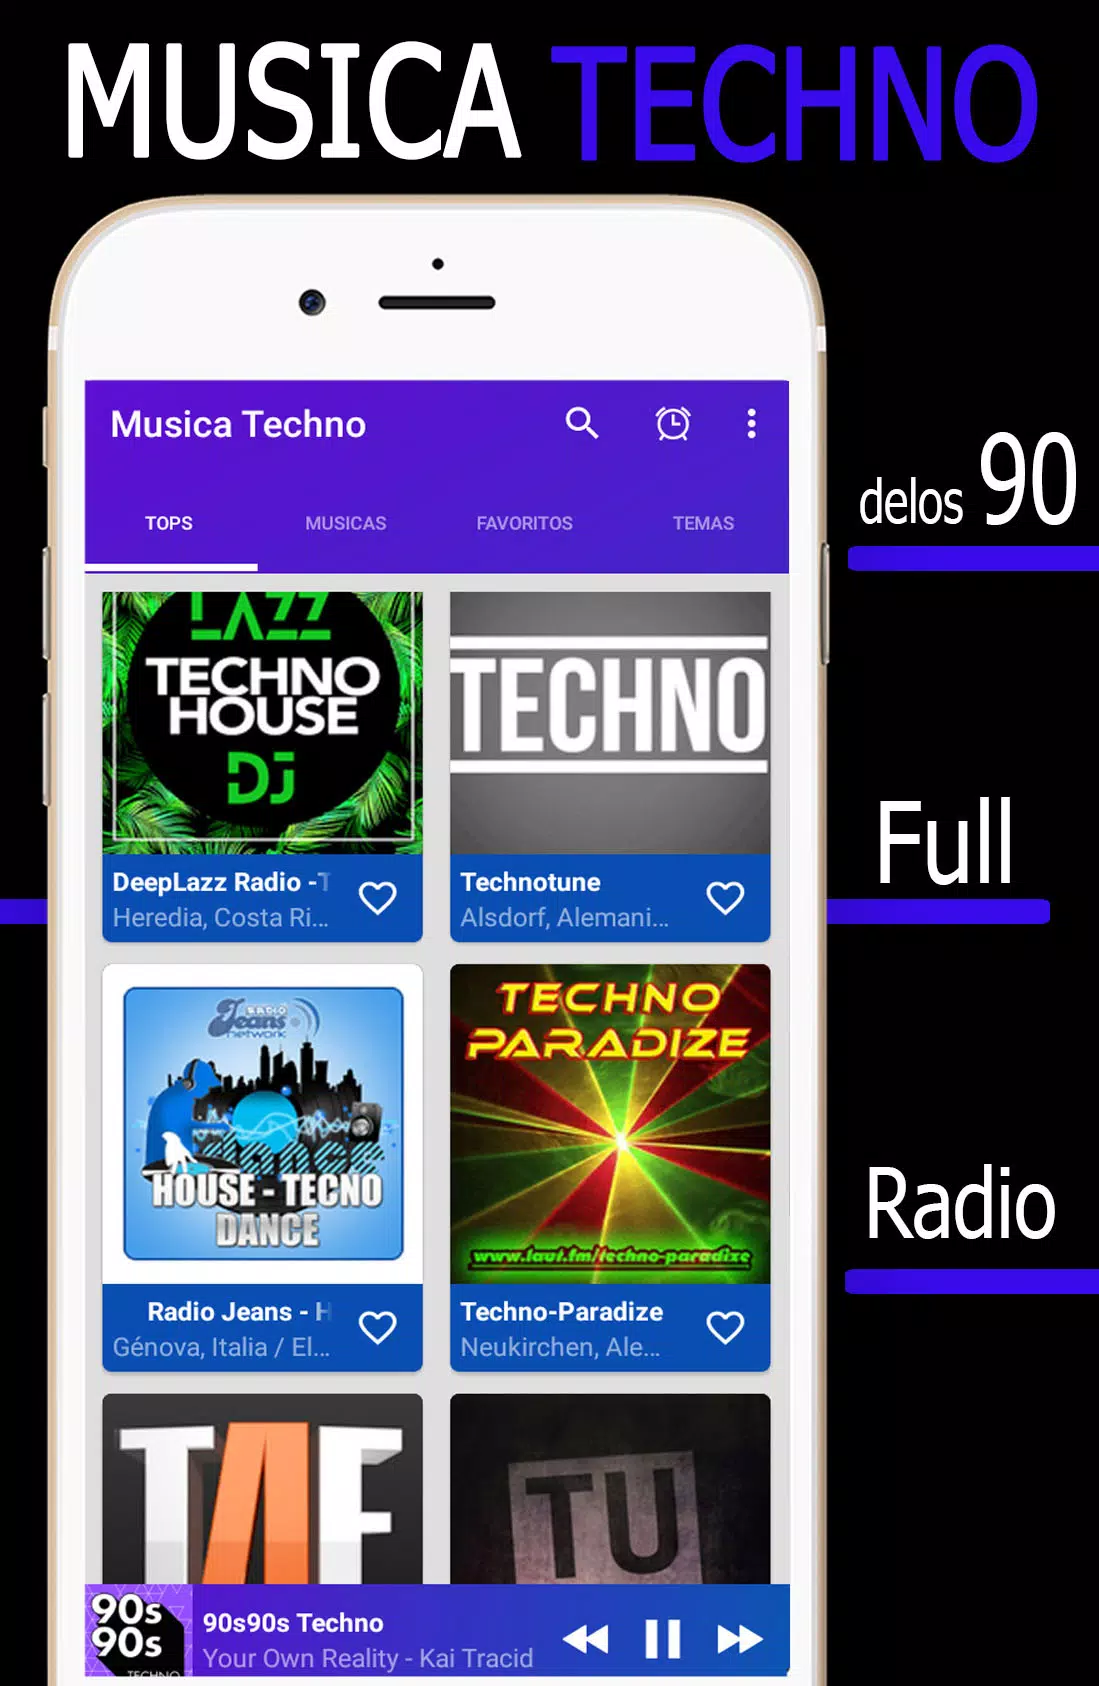 Descarga de APK de Musica Techno delos 90 para Android